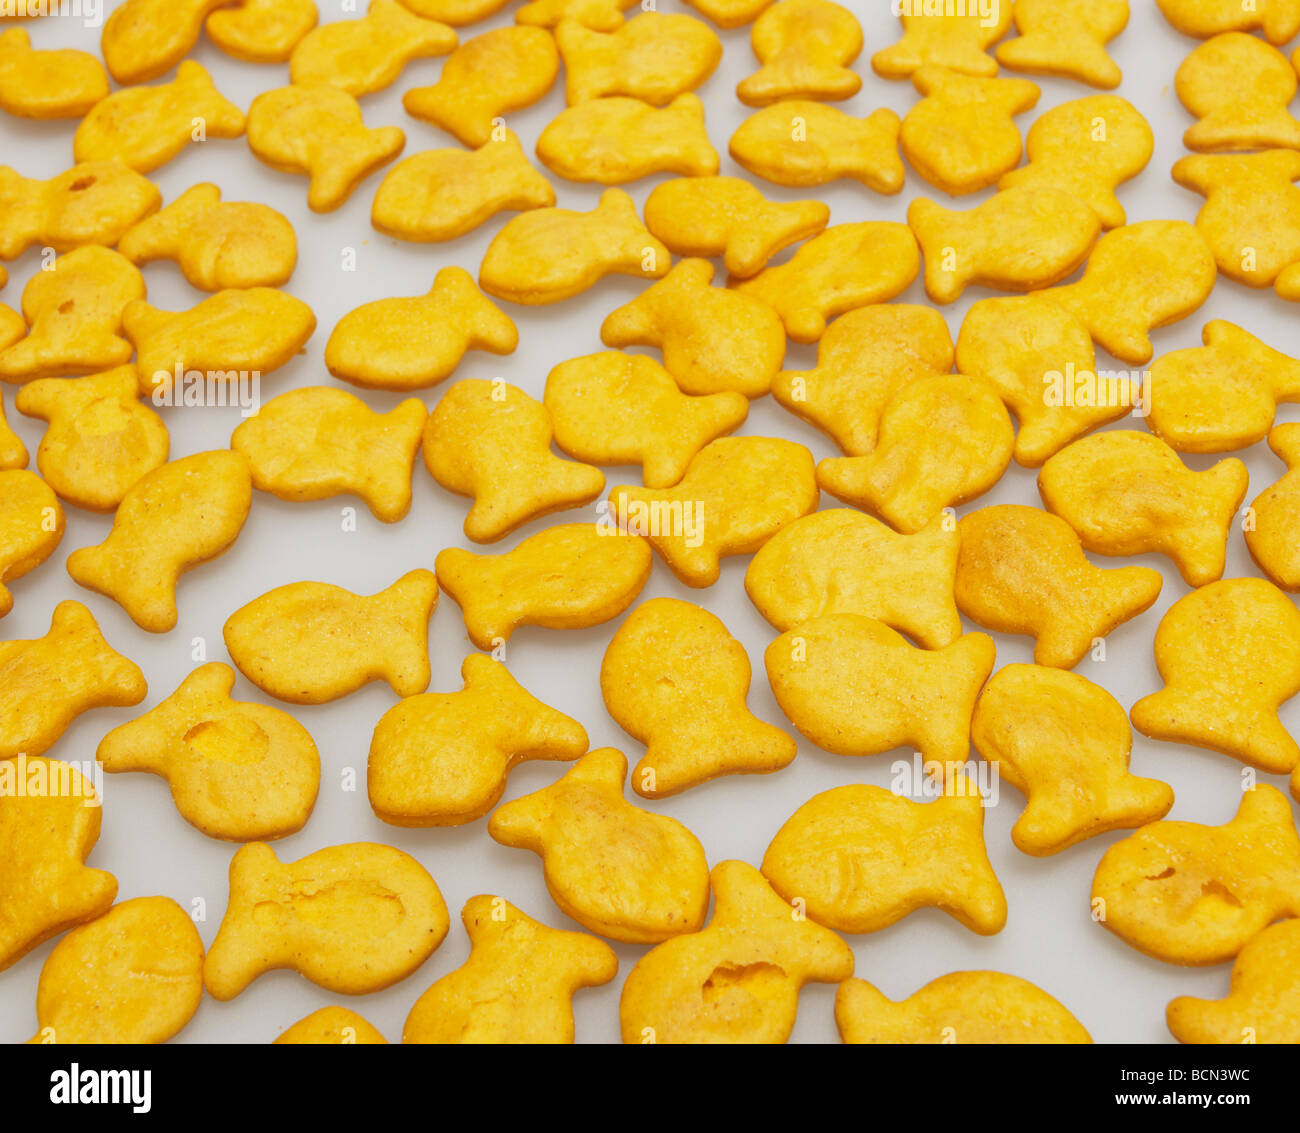 Full Frame of Salty Goldfish Crackers Stock Photo